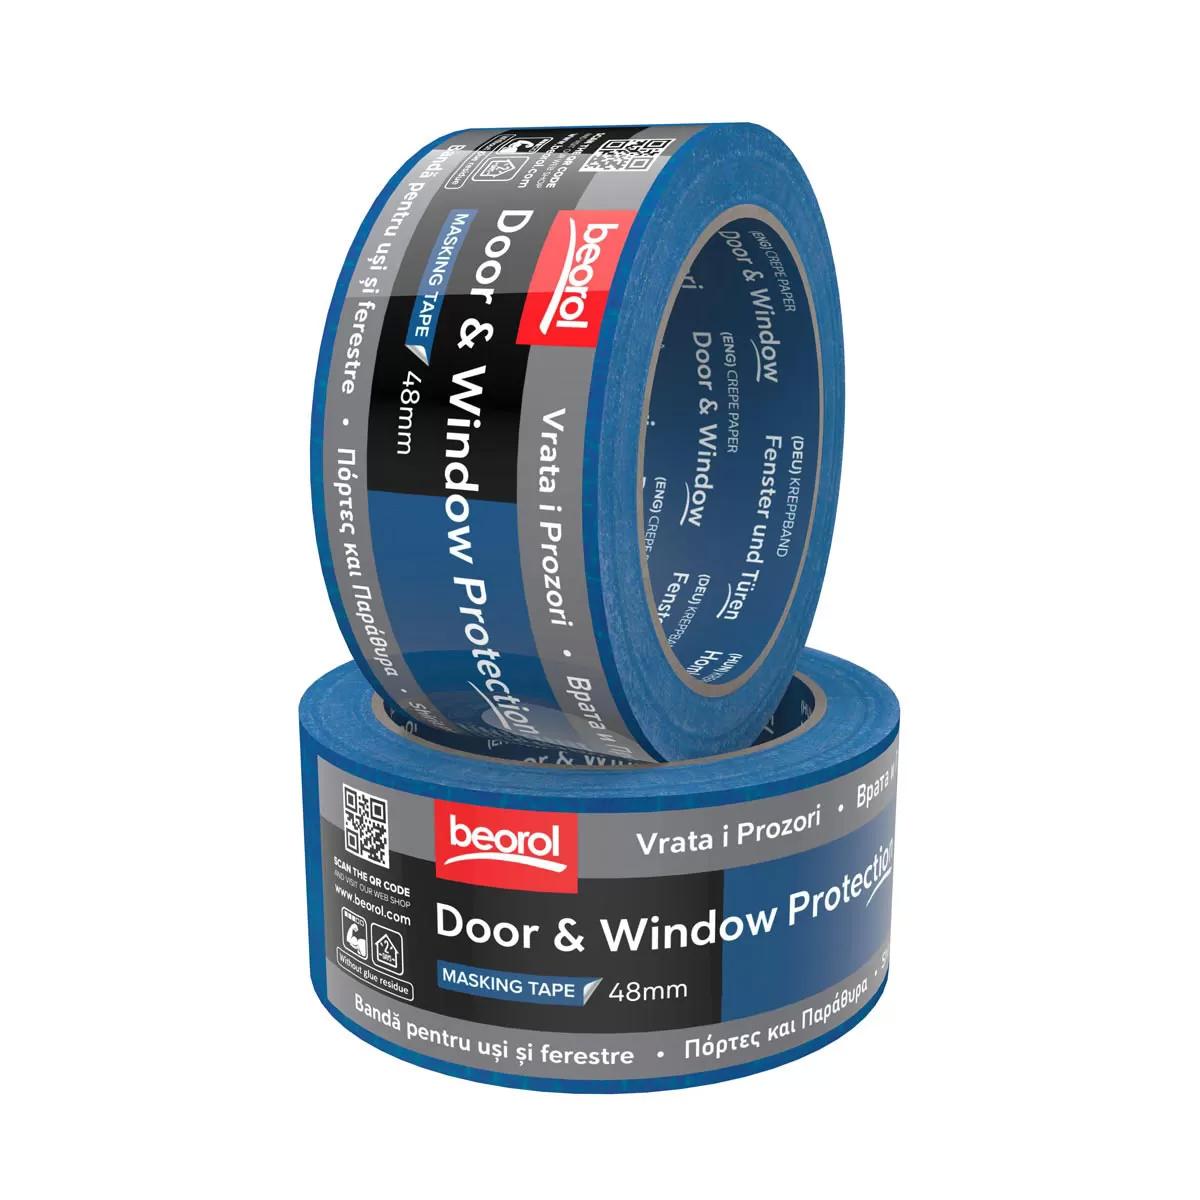 Masking tape Door & Window protection 48mm x 50m 